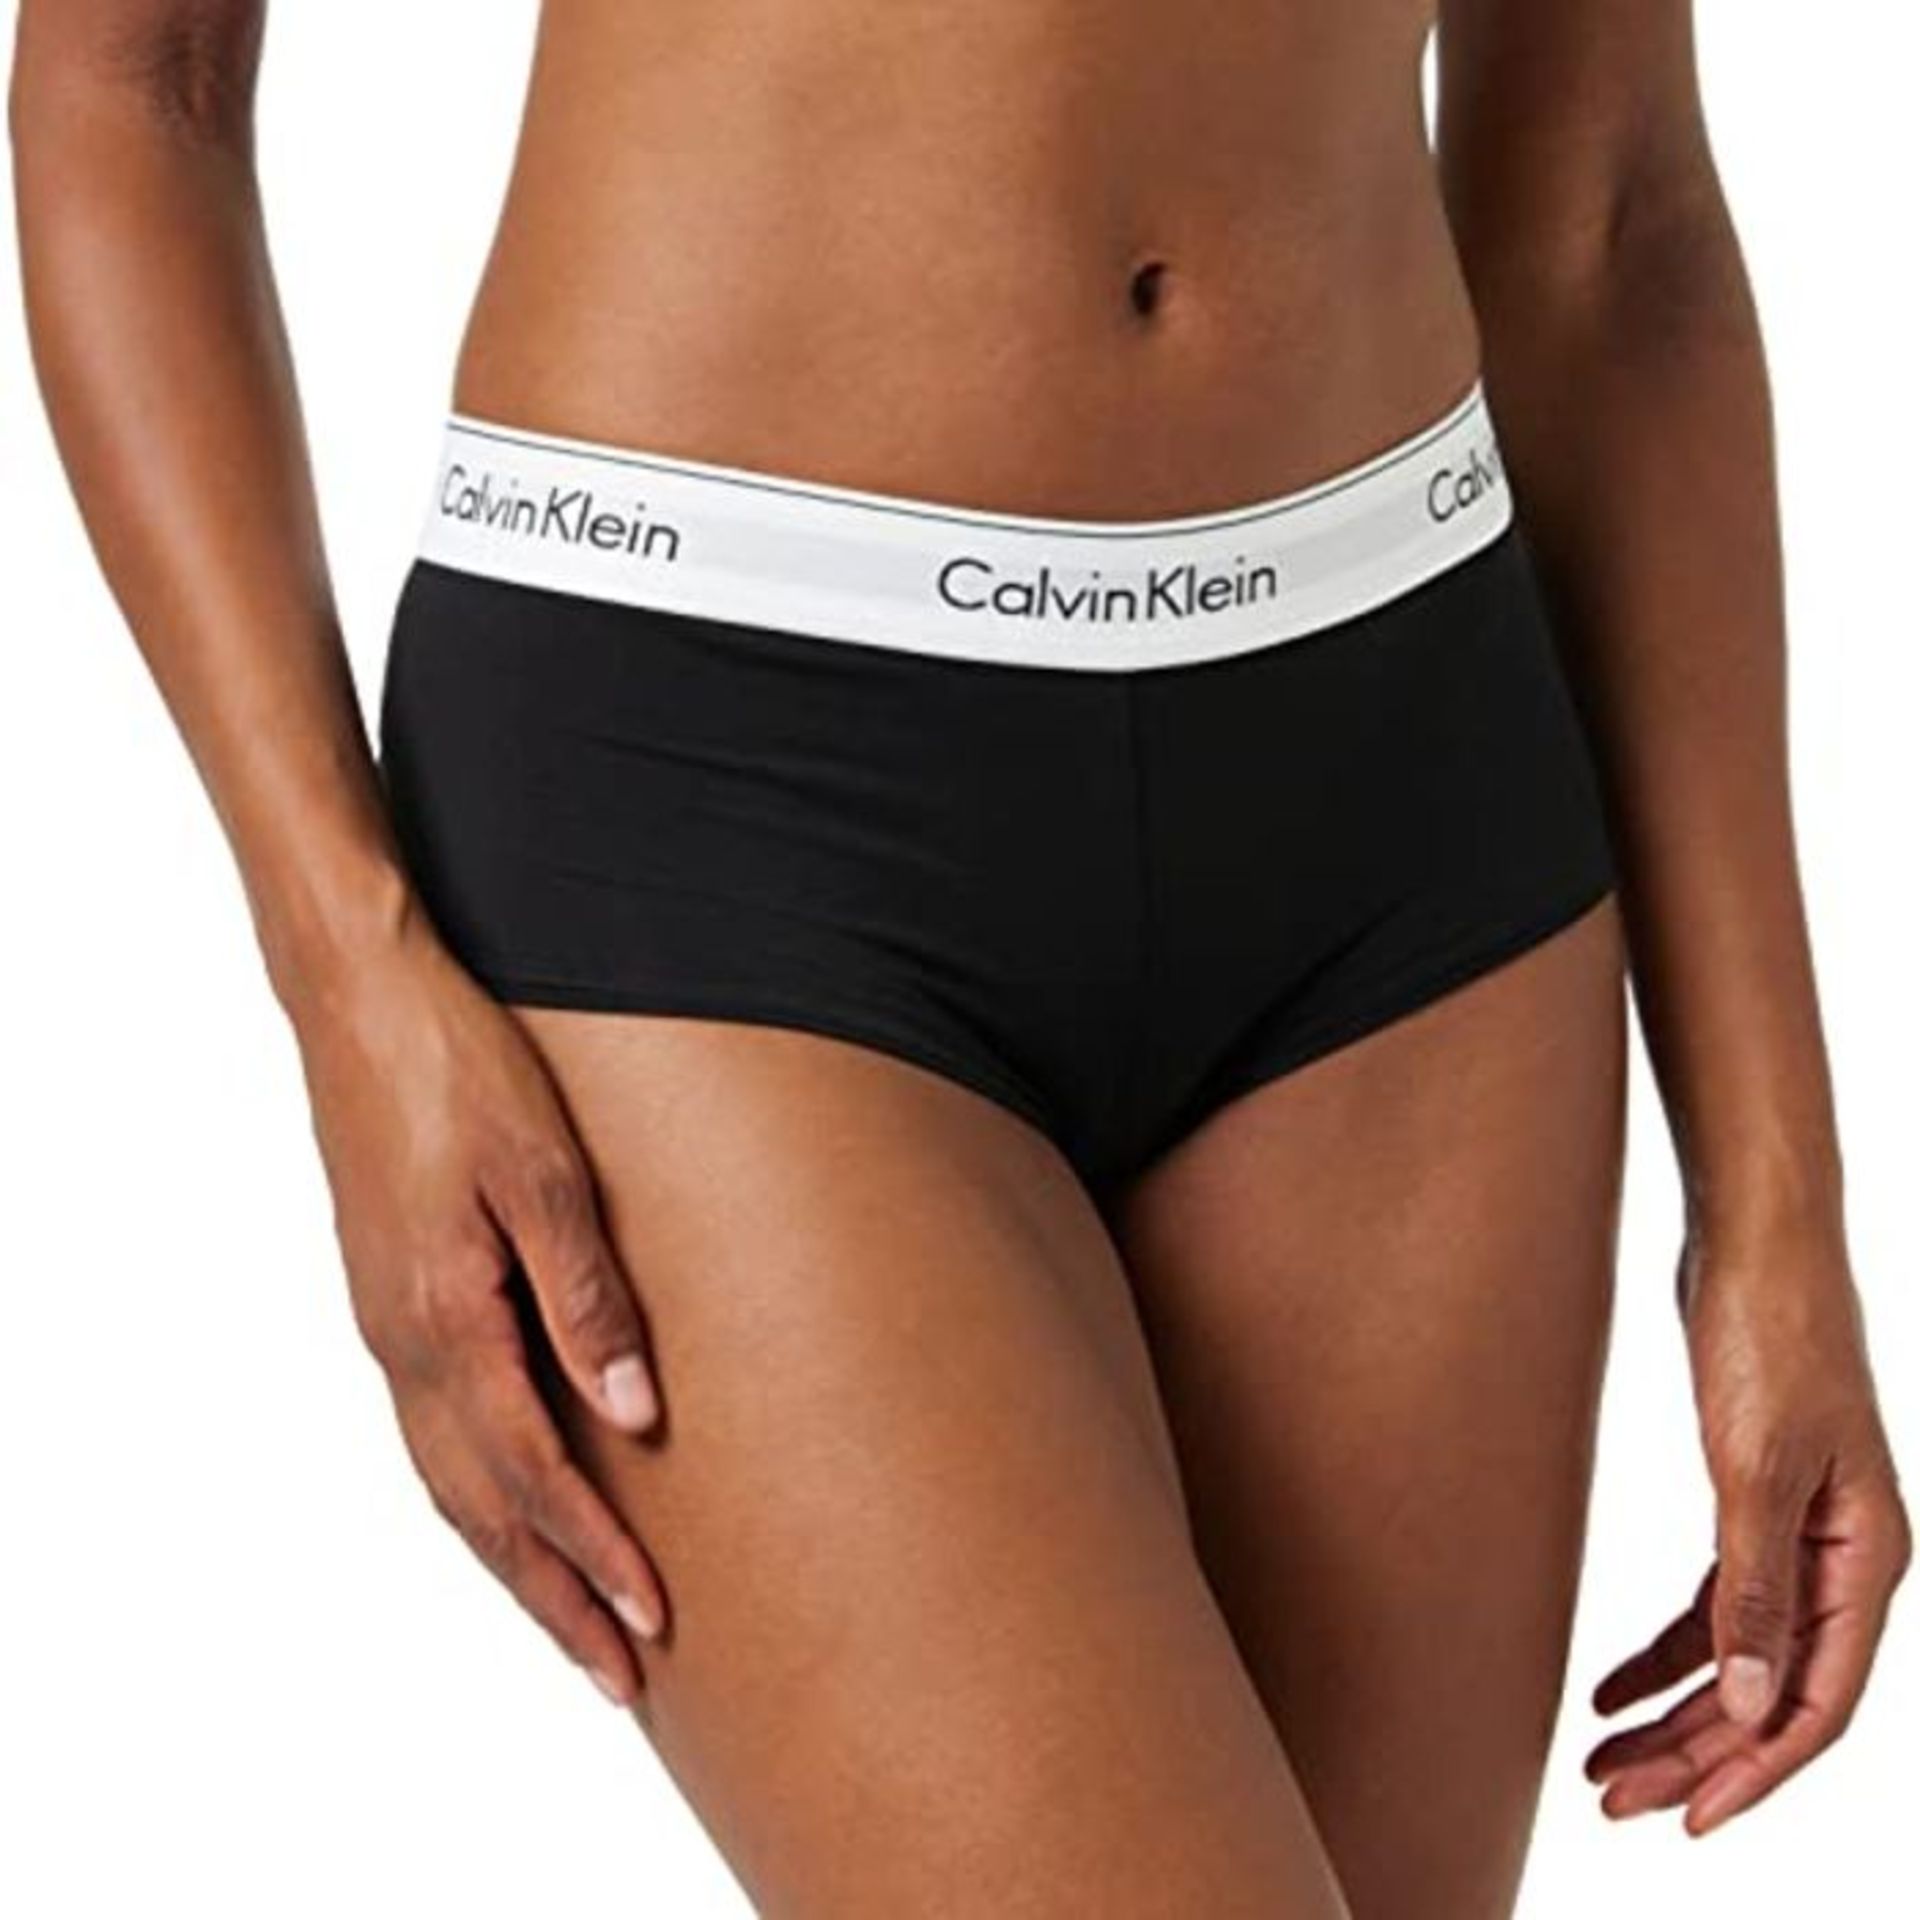 Calvin Klein - Women's Hipster Pants - Modern Cotton - 53% Cotton 35% Modal 12% Elasta